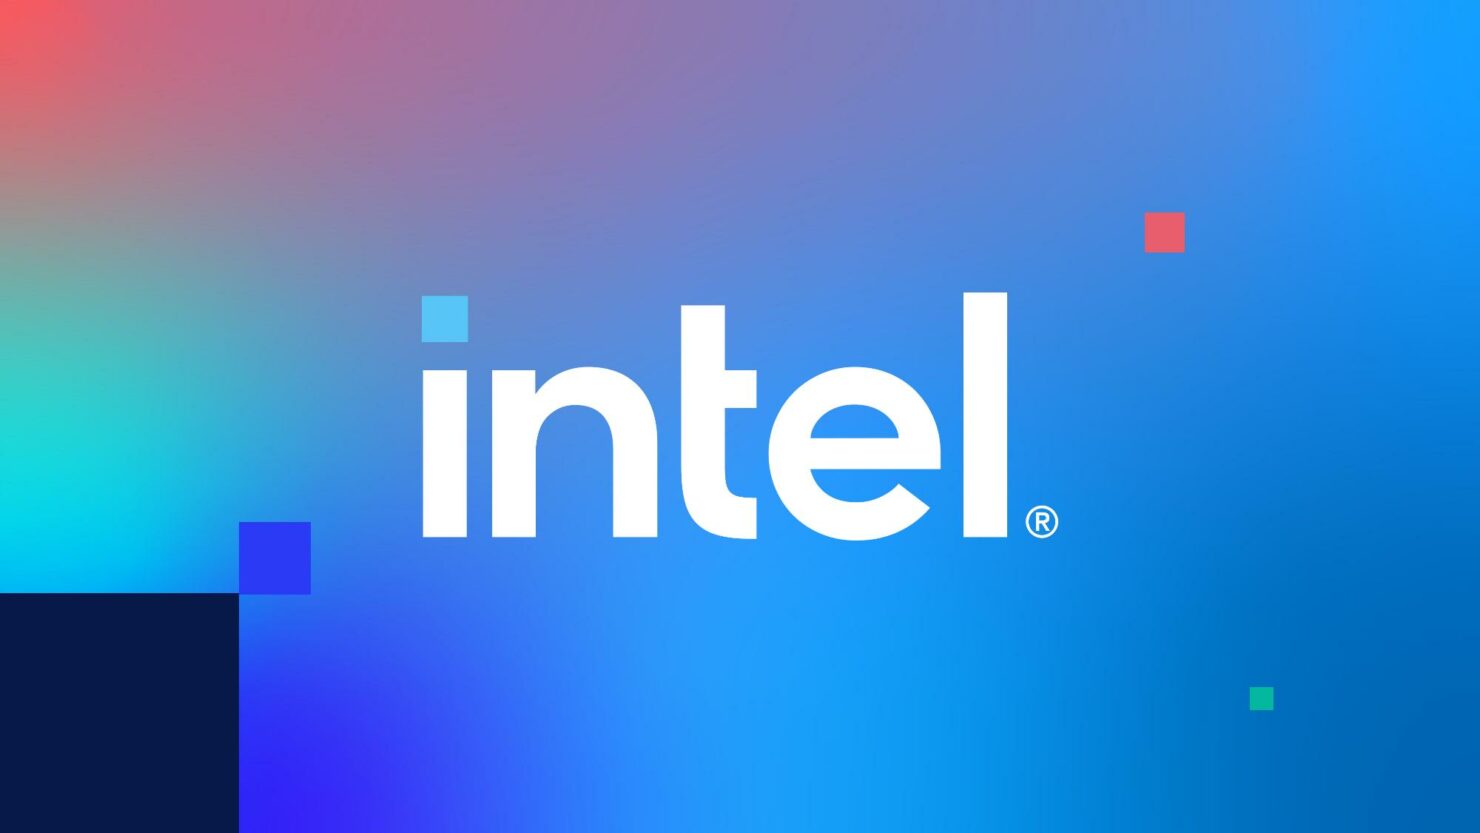 Intel Logo 2020